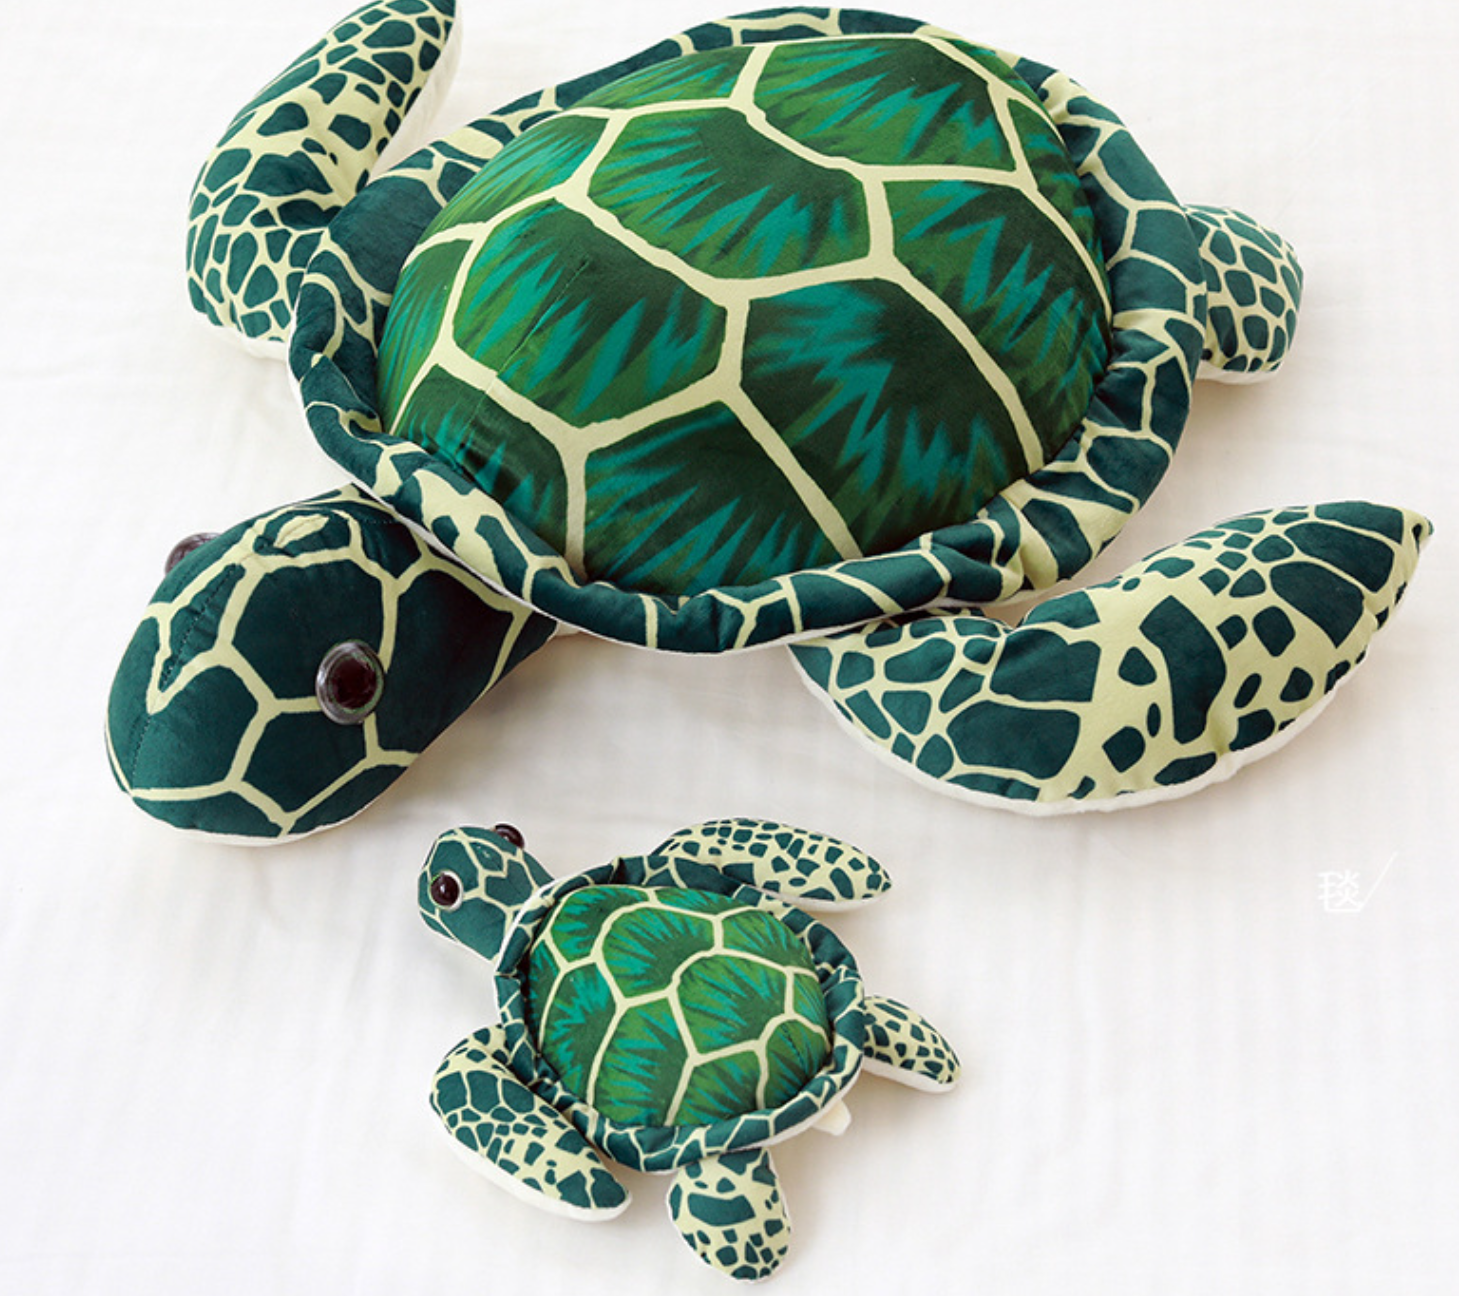 Juguetes de animales marinos Juguetes de tortugas rellenas